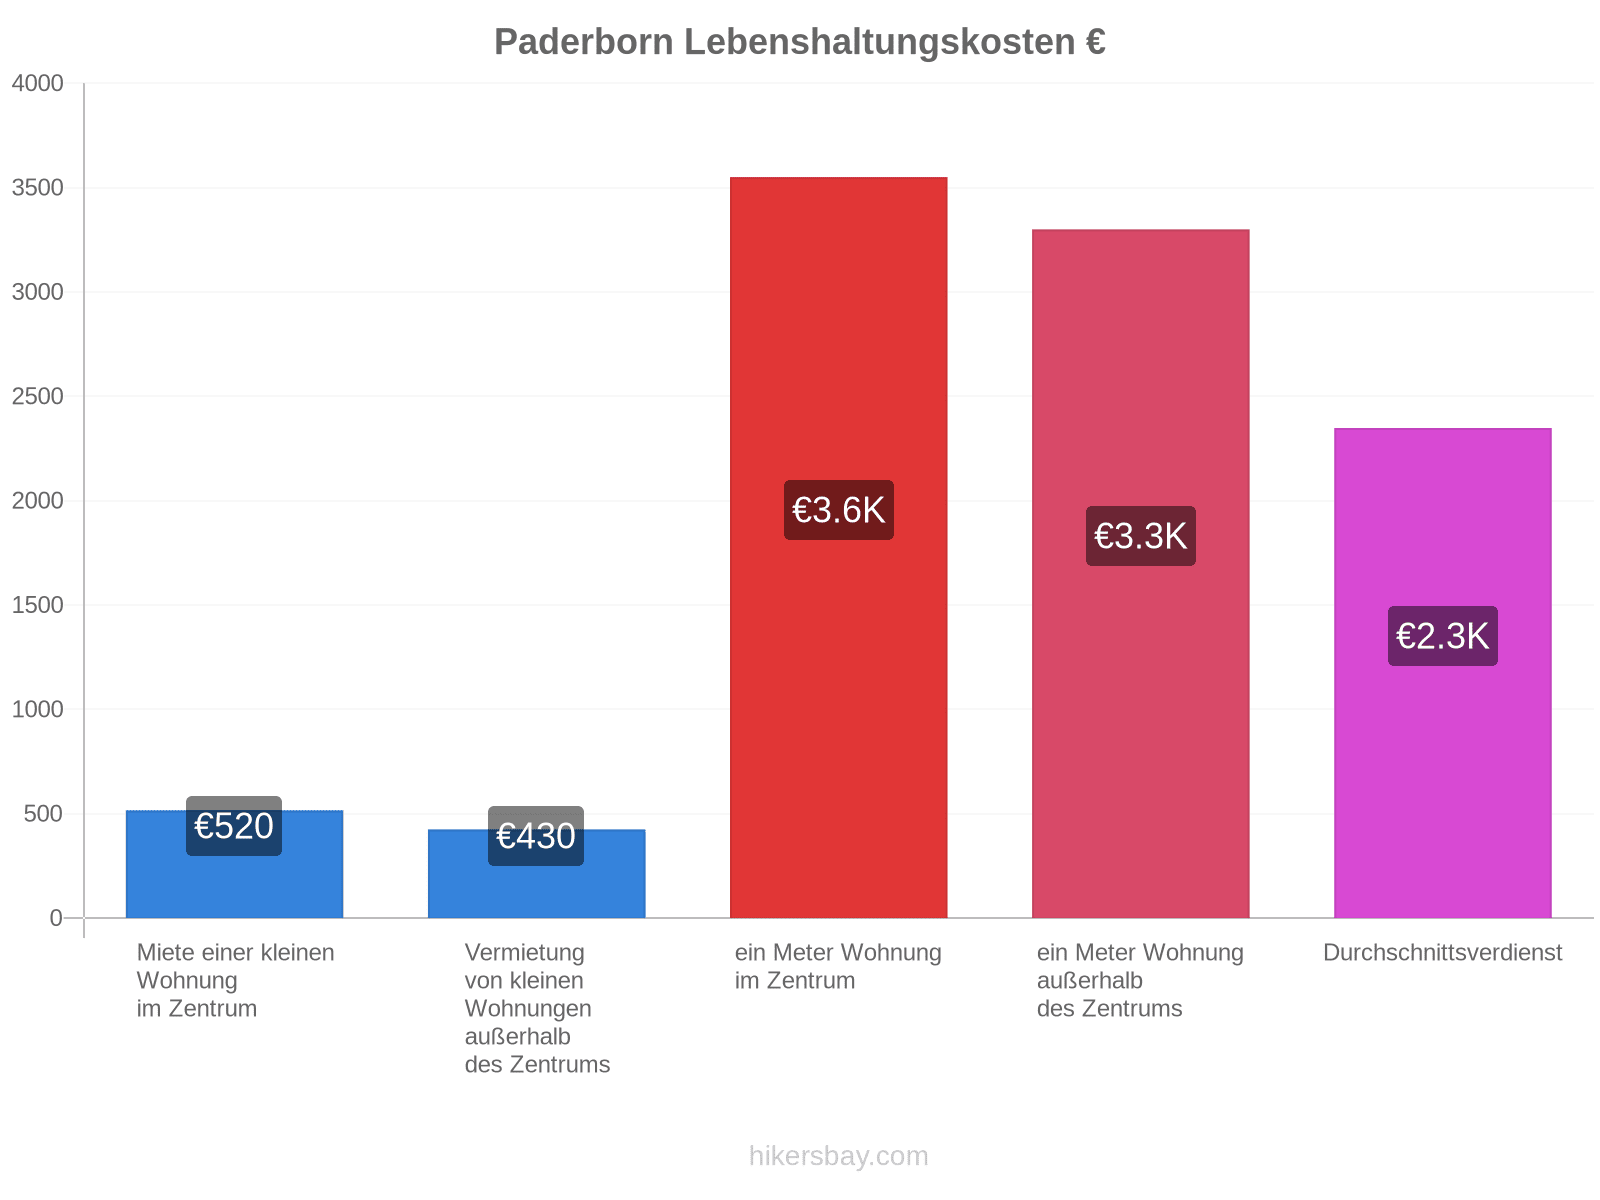 Paderborn Lebenshaltungskosten hikersbay.com